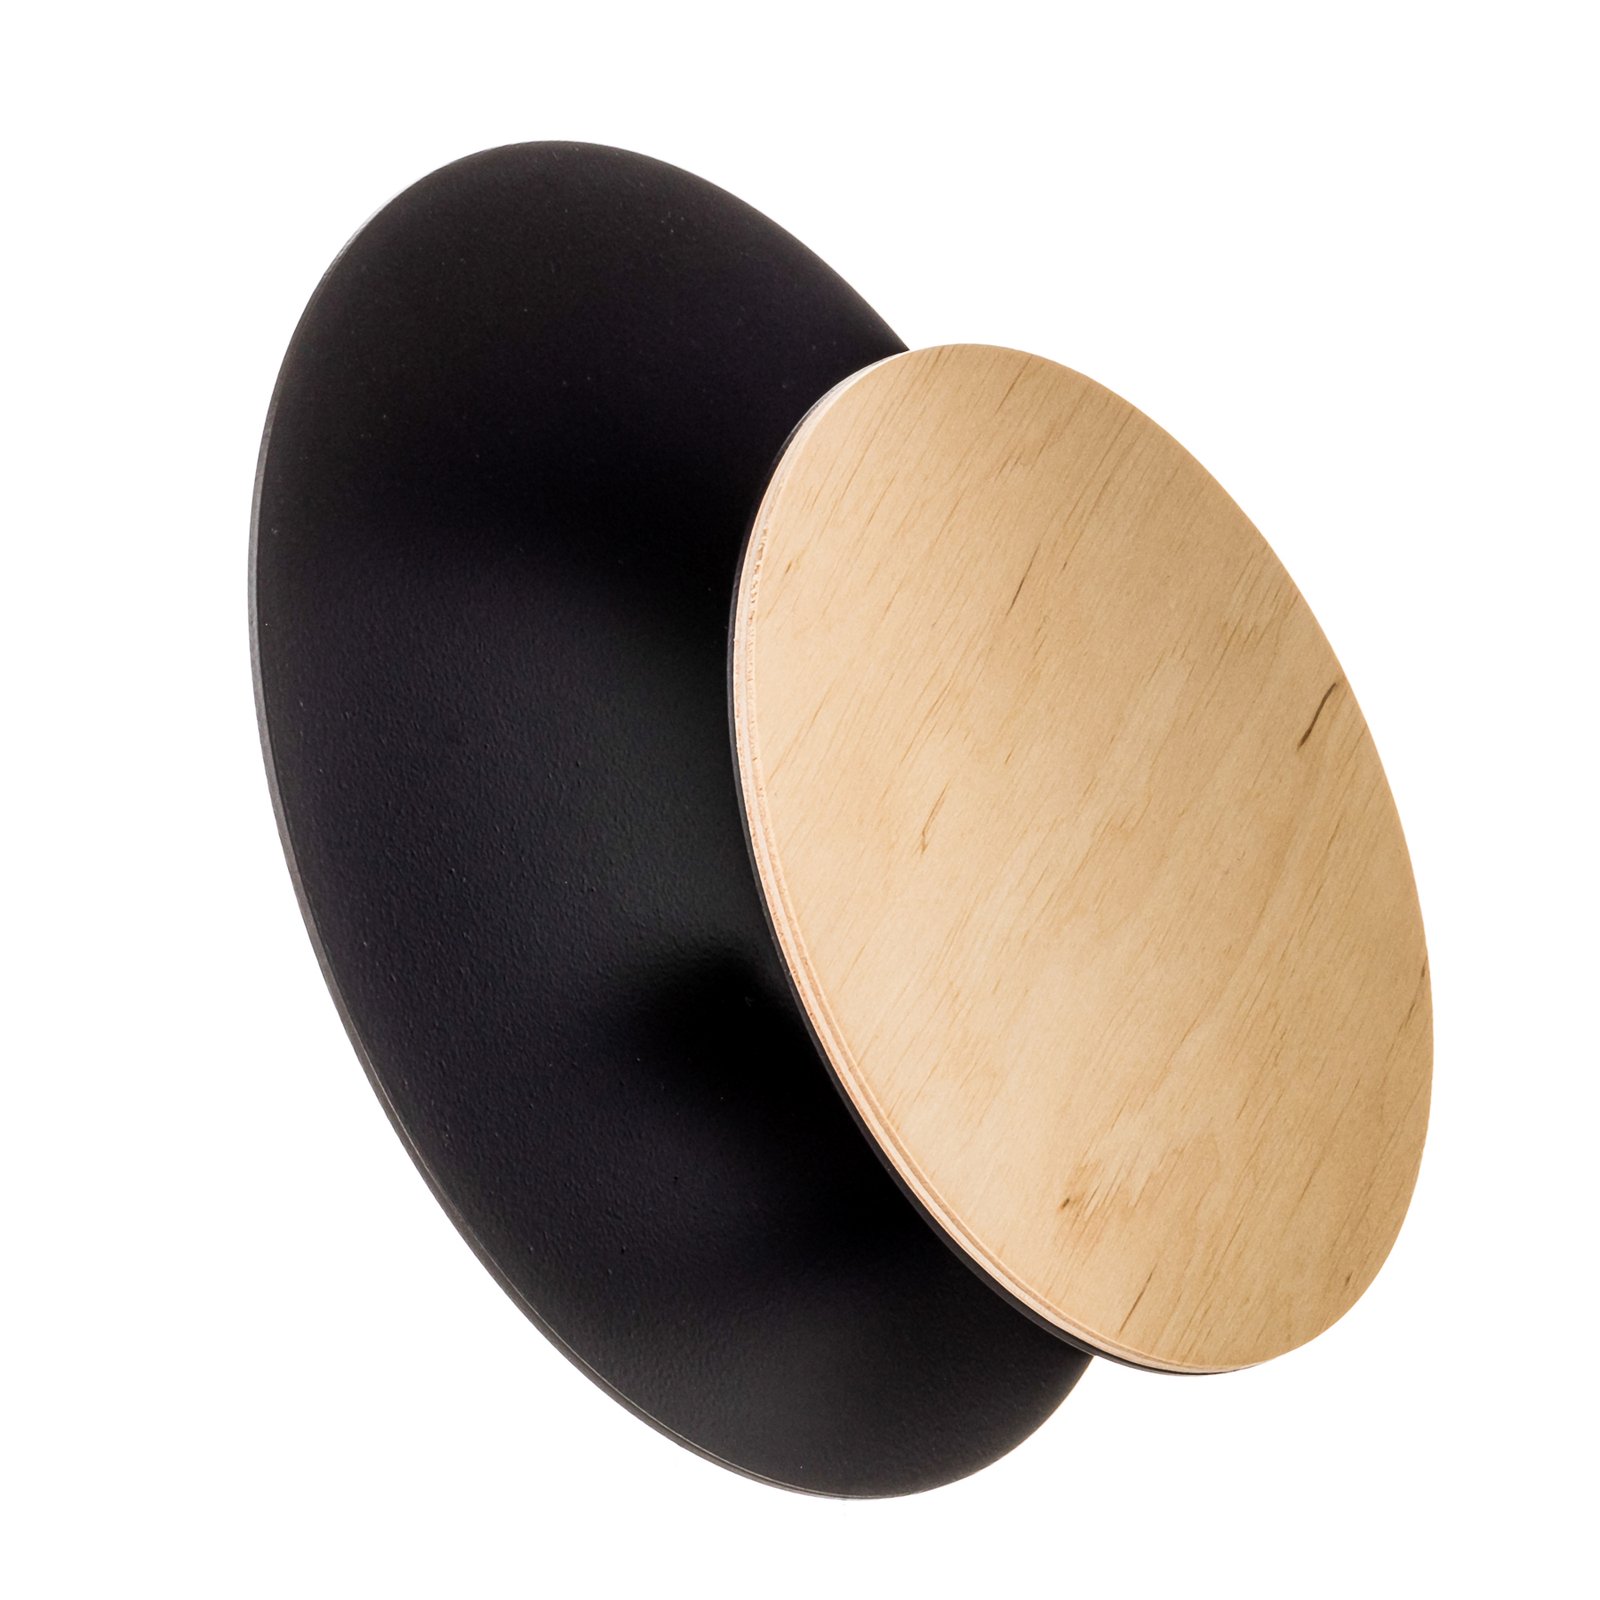 Wandlamp Circle in zwart met hout-decorplaat